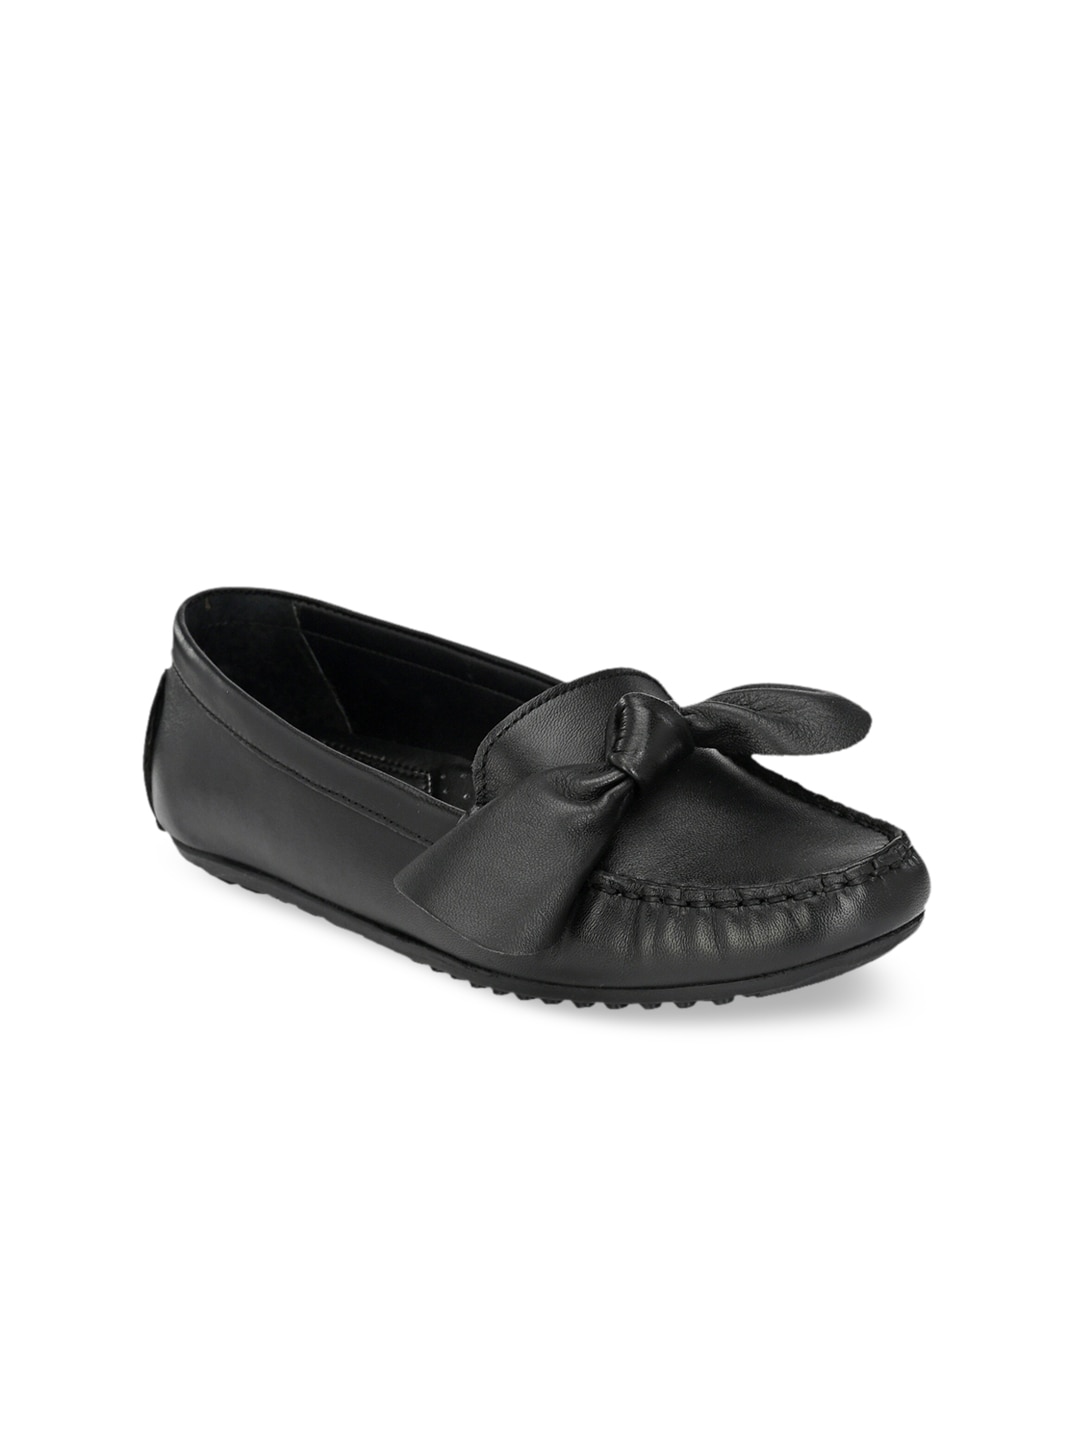 CARLO ROMANO Women Black Leather Loafers Price in India